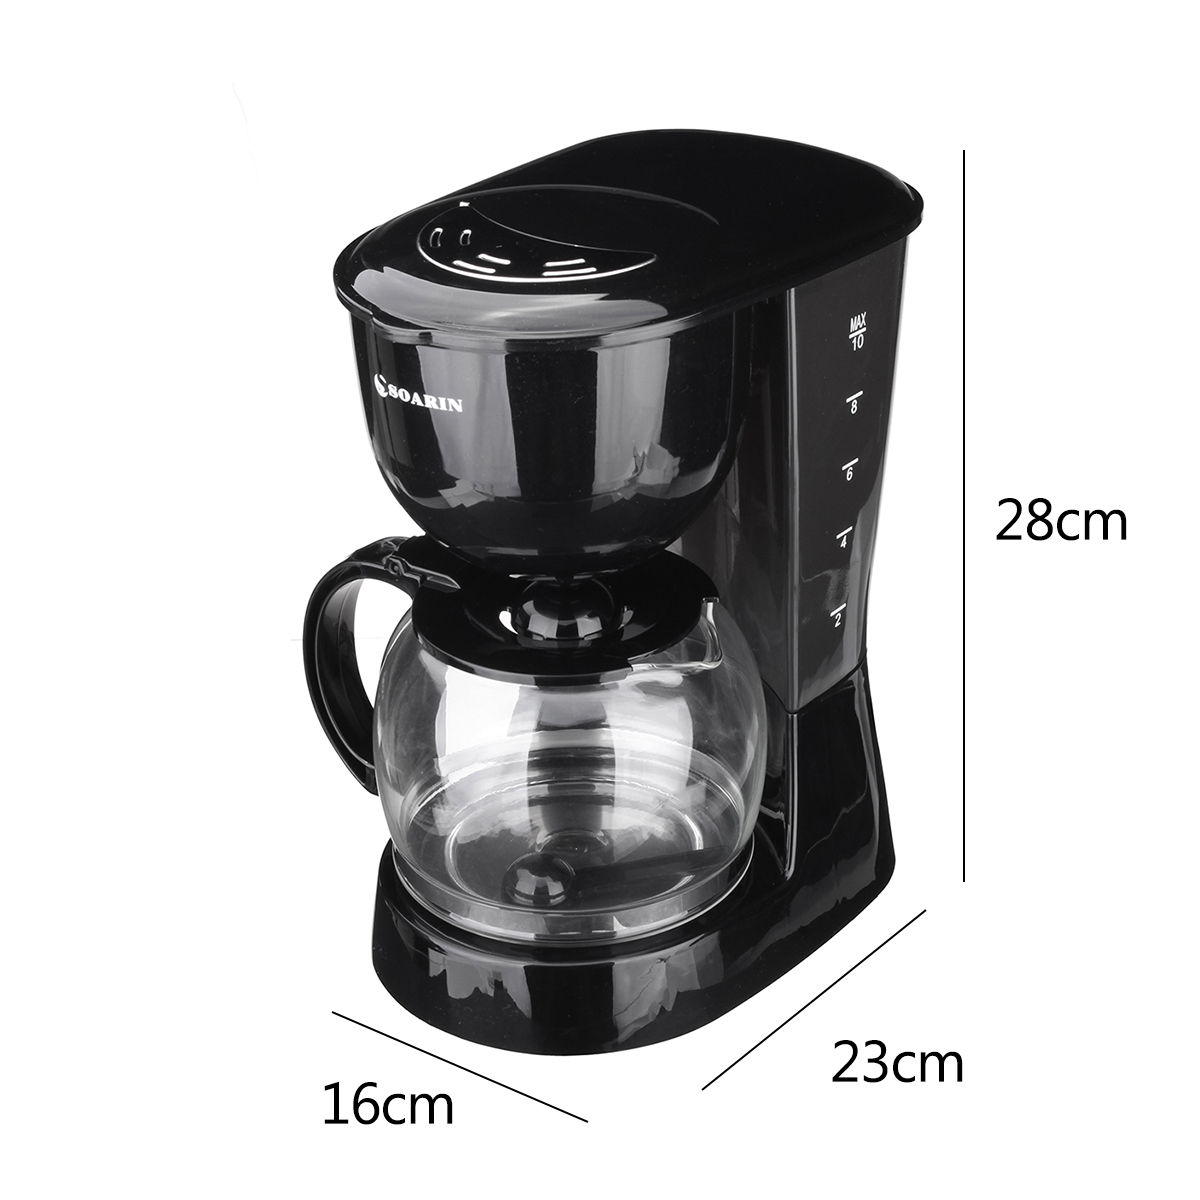 Soarin 1.25L 800W Electric Coffee Tea Maker Espresso Latte Machine Home Office Cafe Coffee Machine 87